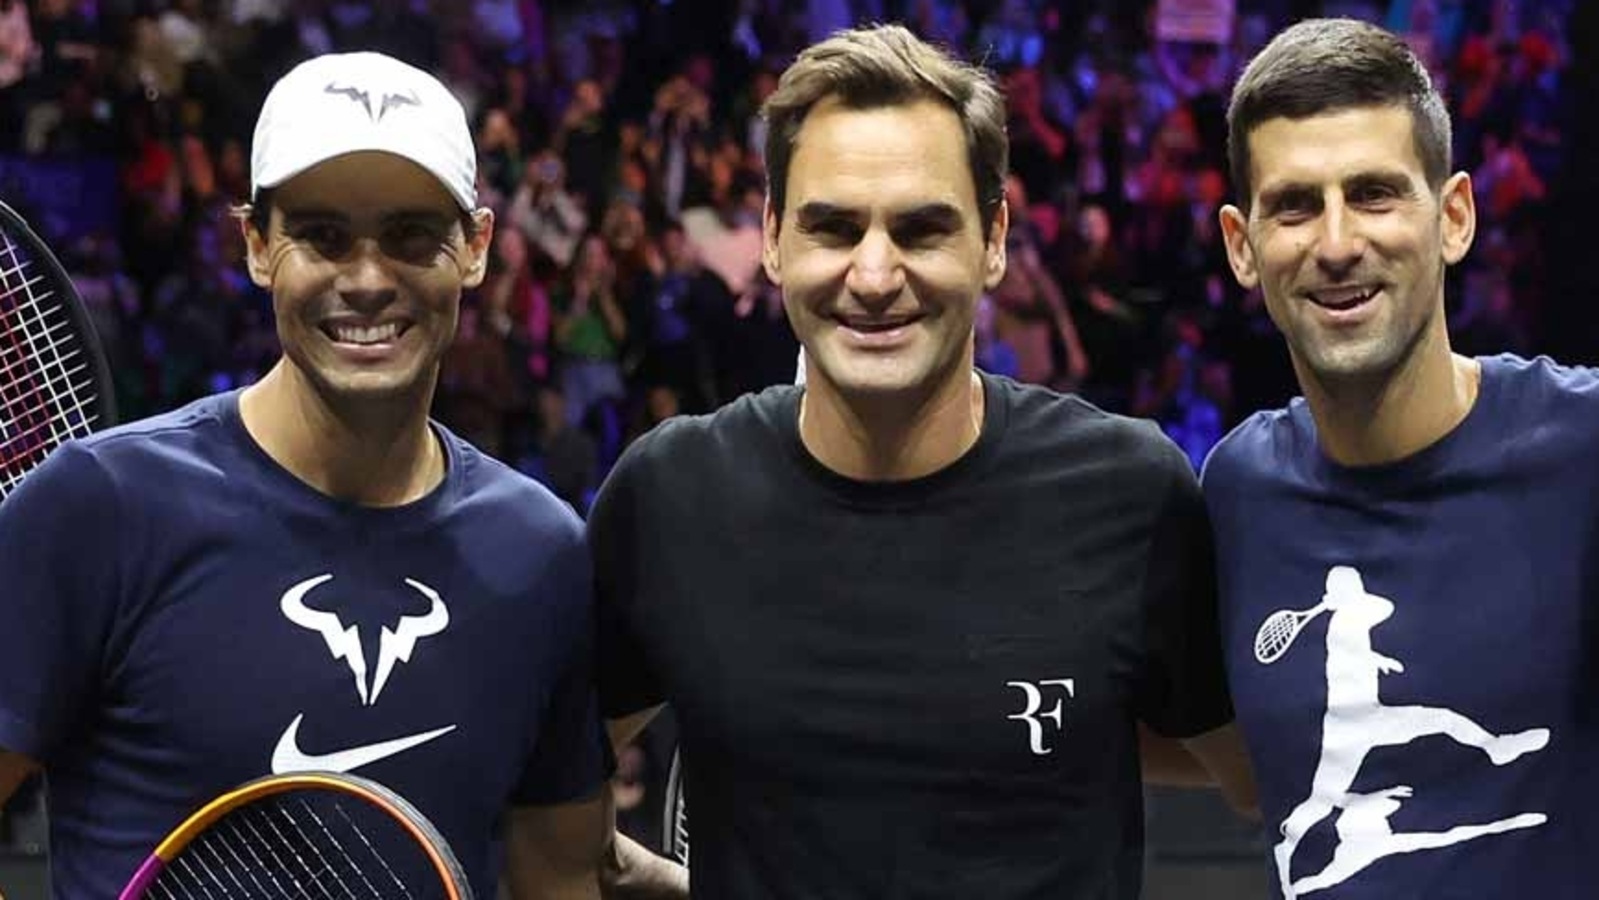 ‘A big rivalry…’: Novak Djokovic downplays Roger Federer retirement with epic Rafael Nadal comment